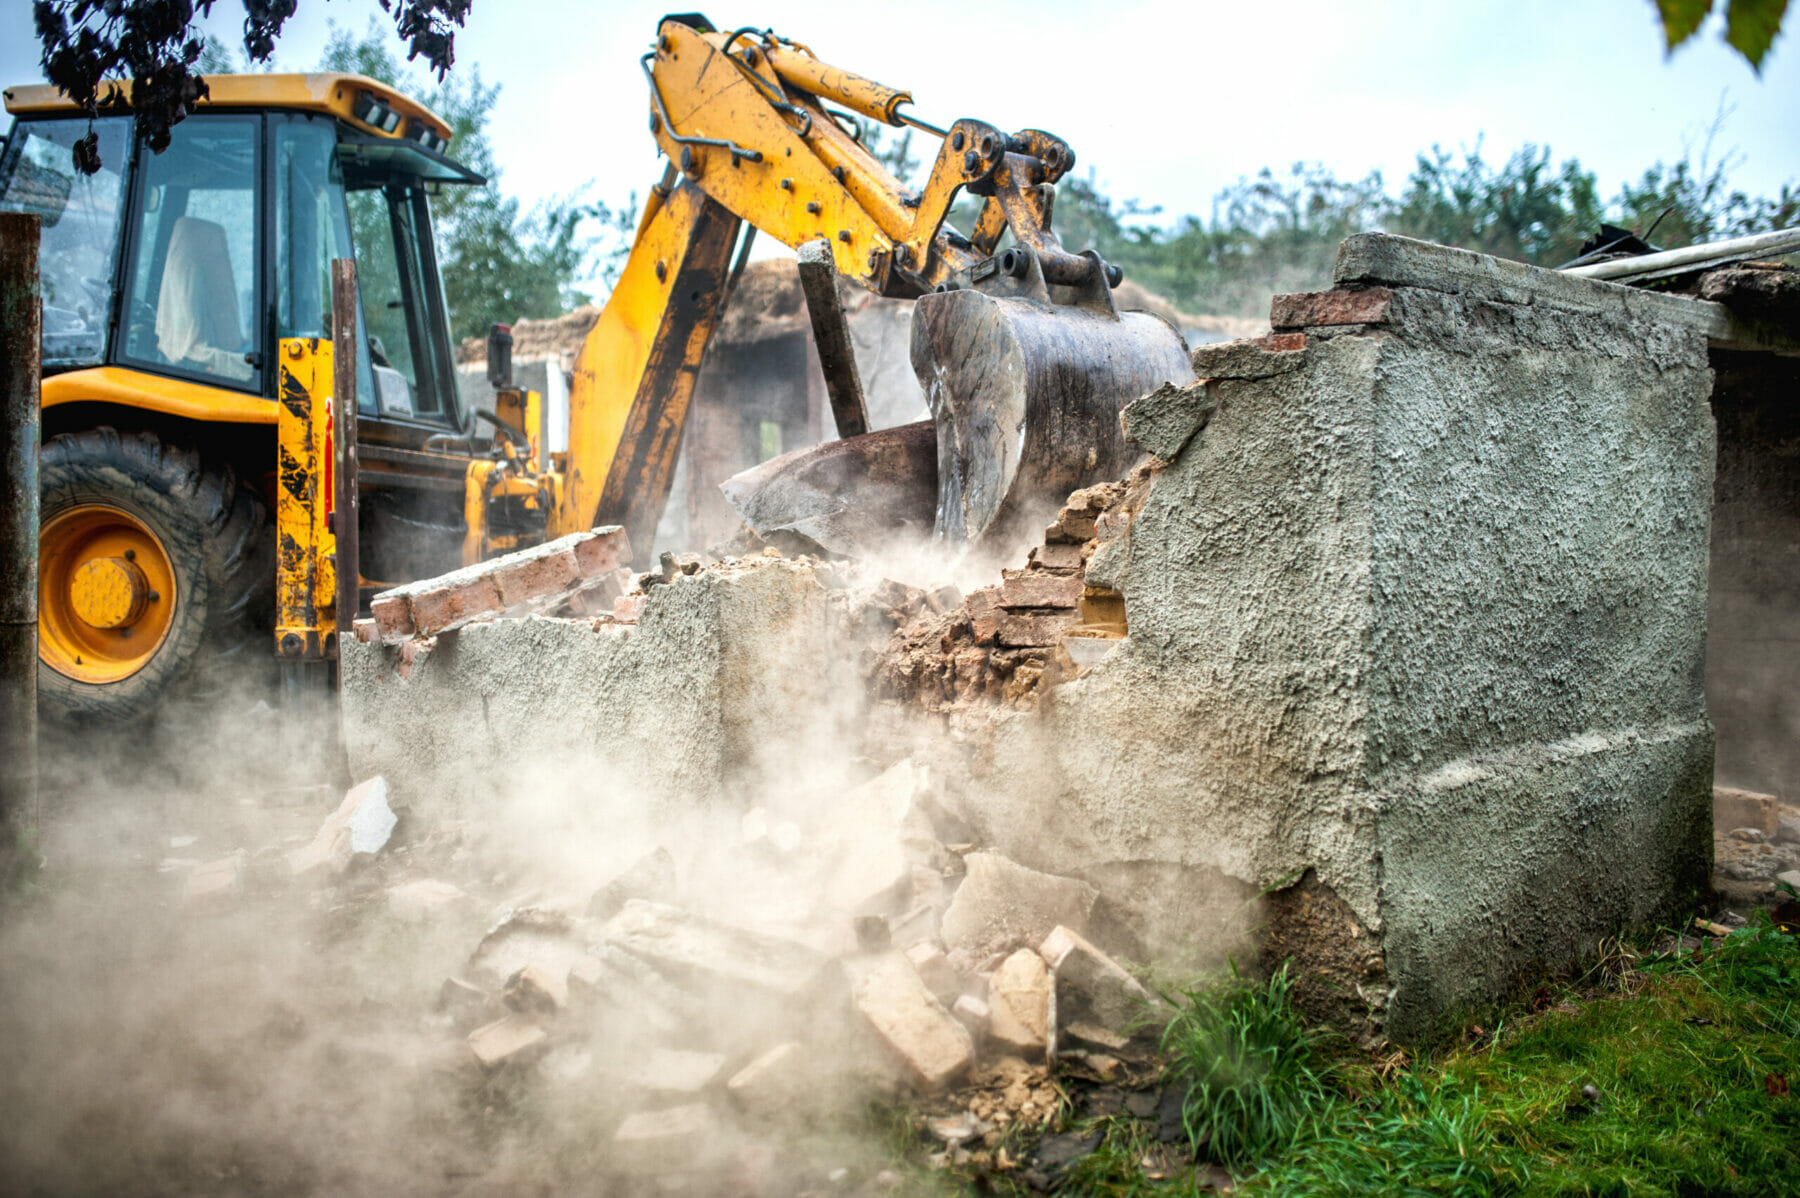 bulldozer demolishing concrete brick walls of small building